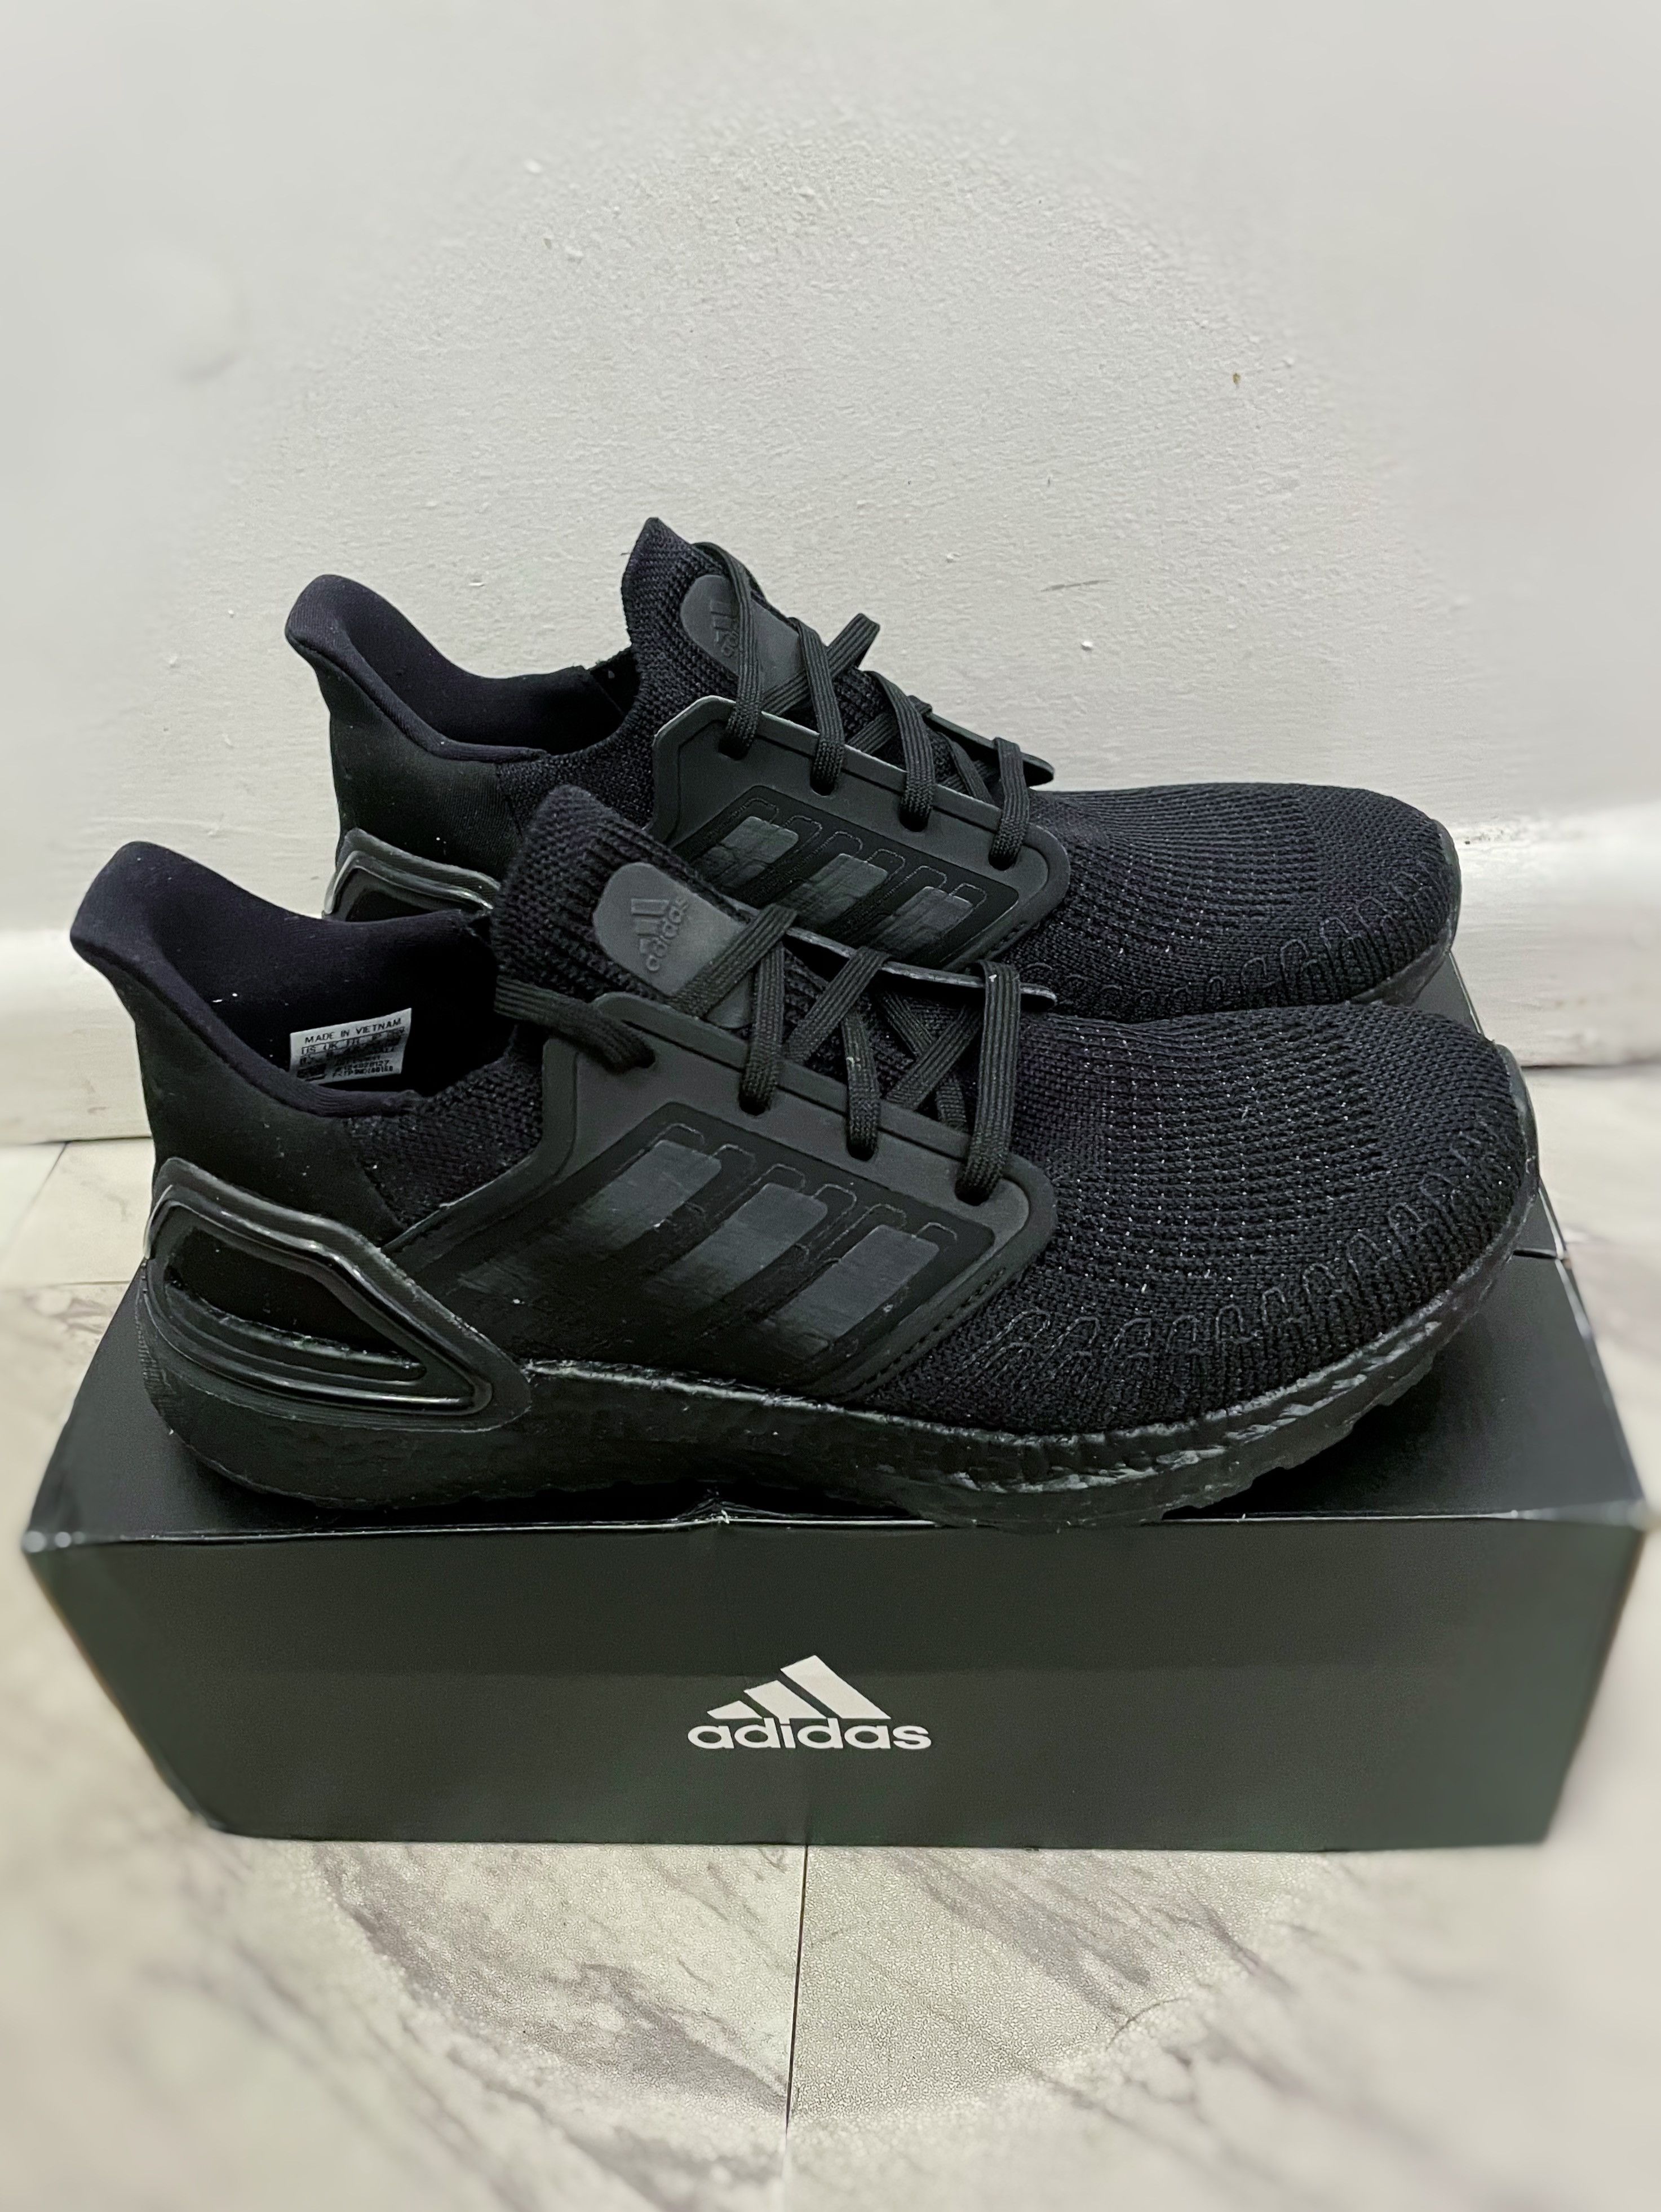 Adidas UltraBoost 20 'Triple Black' | Grailed